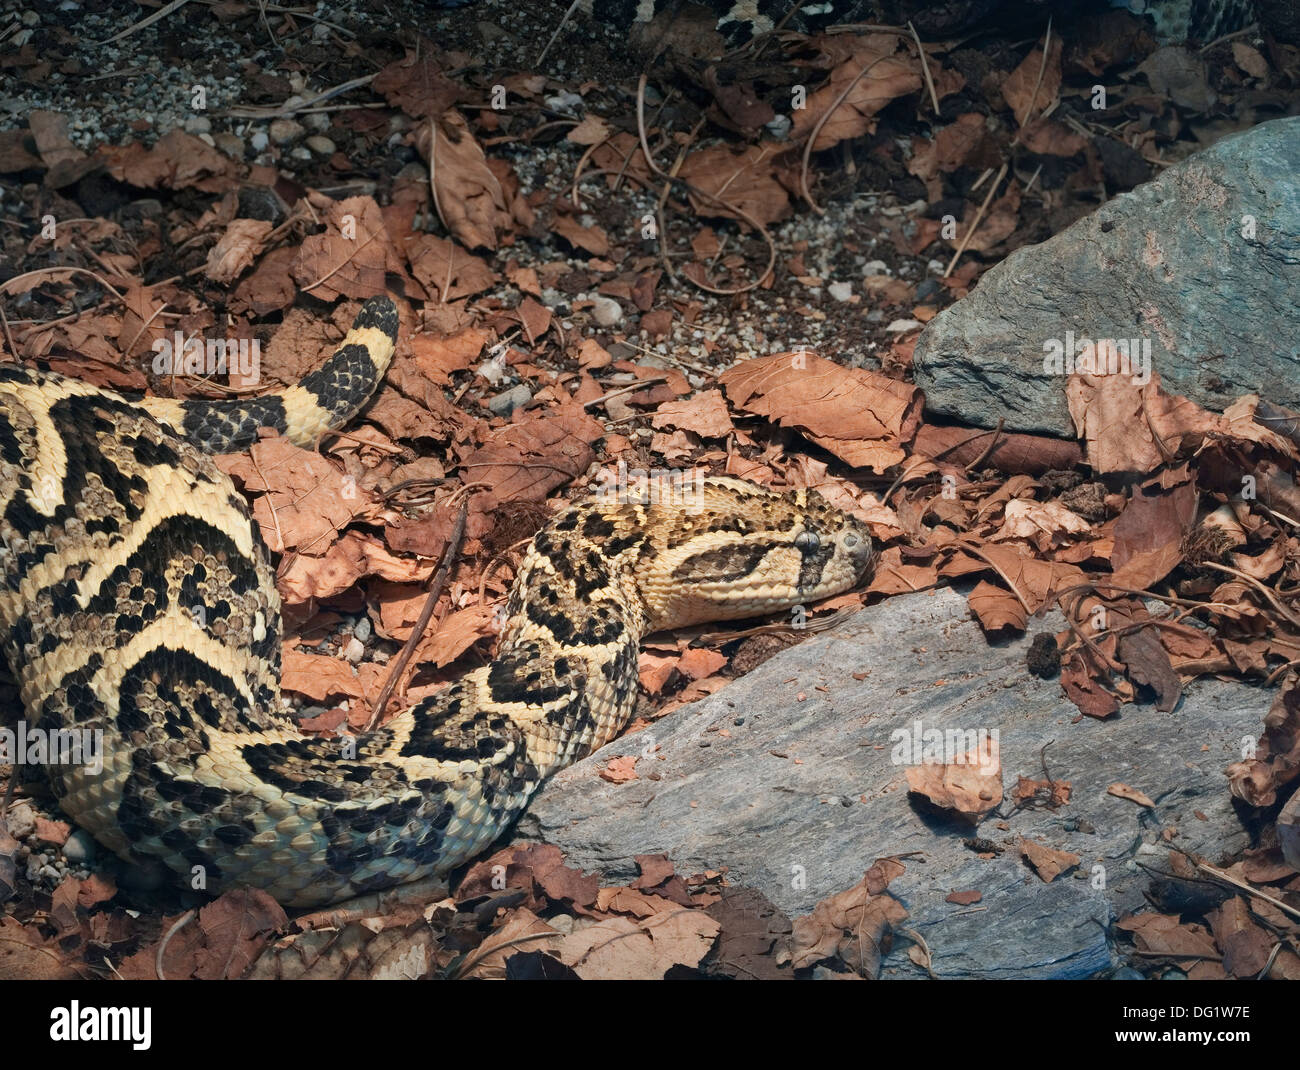 Common African Venomous Snake Bitis Arietans, Puff Adder Stock Photo